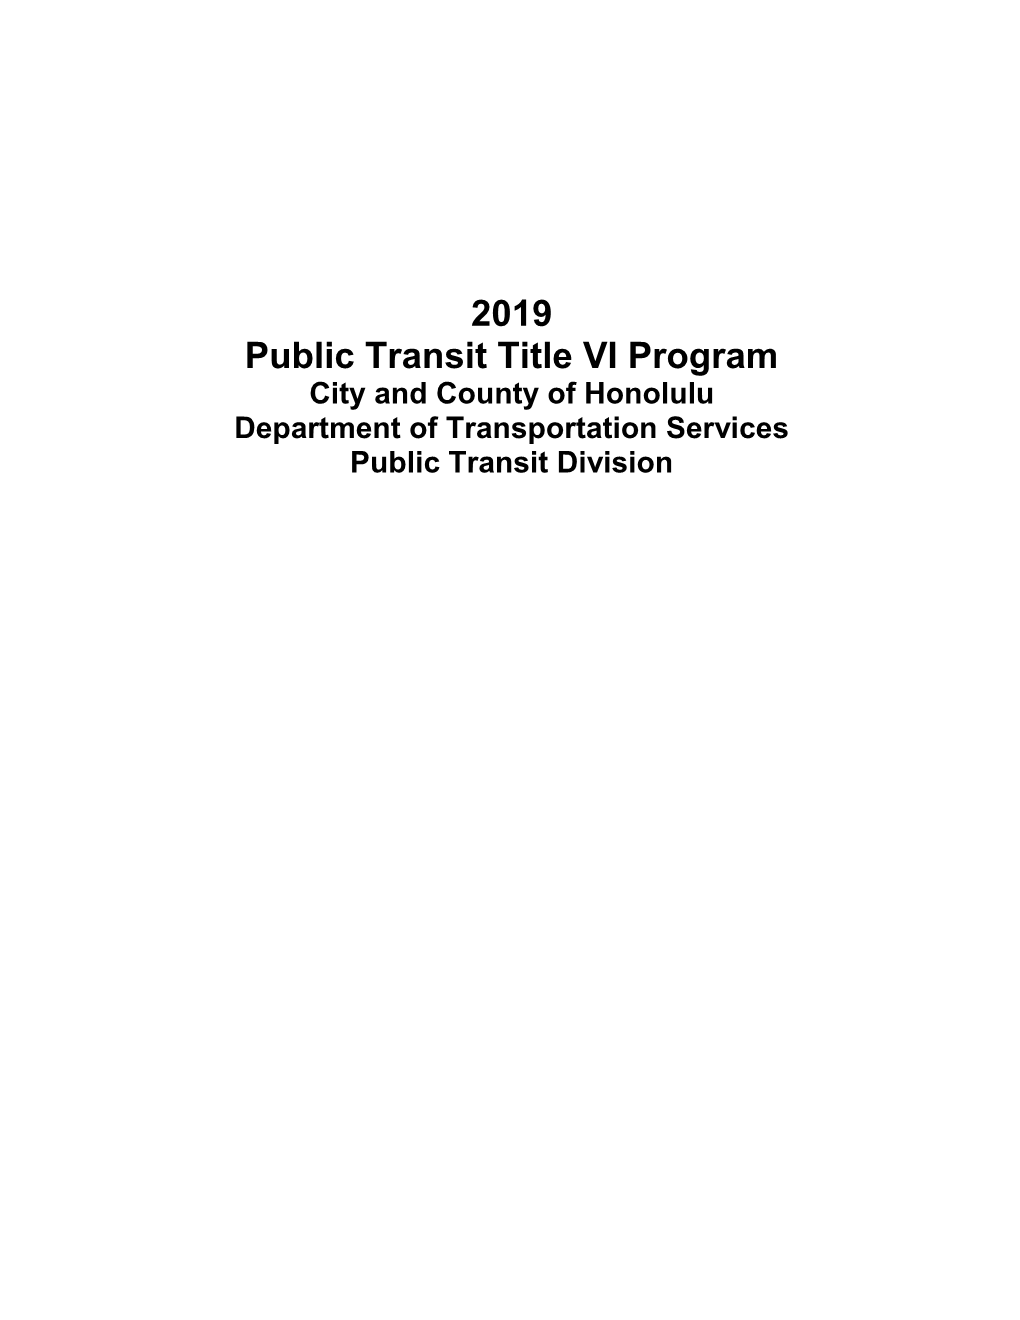 2019 Public Transit Title VI Program City and County of Honolulu Department of Transportation Services Public Transit Division 2019 Public Transit Title VI Program